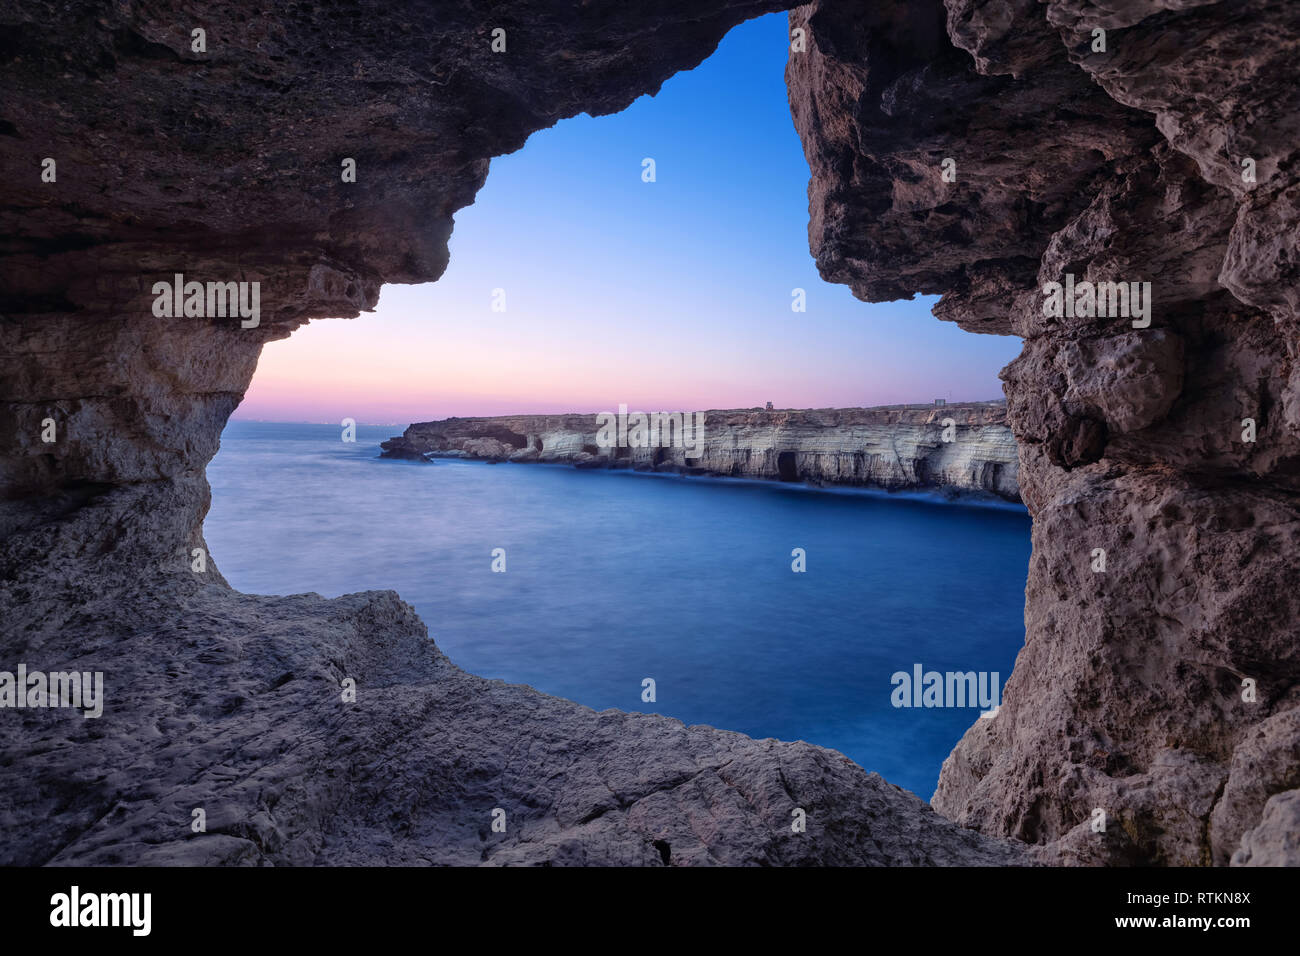 Sea cave at dusk on Cape Greco near Ayia Napa, Cyprus (HDR image) Stock Photo